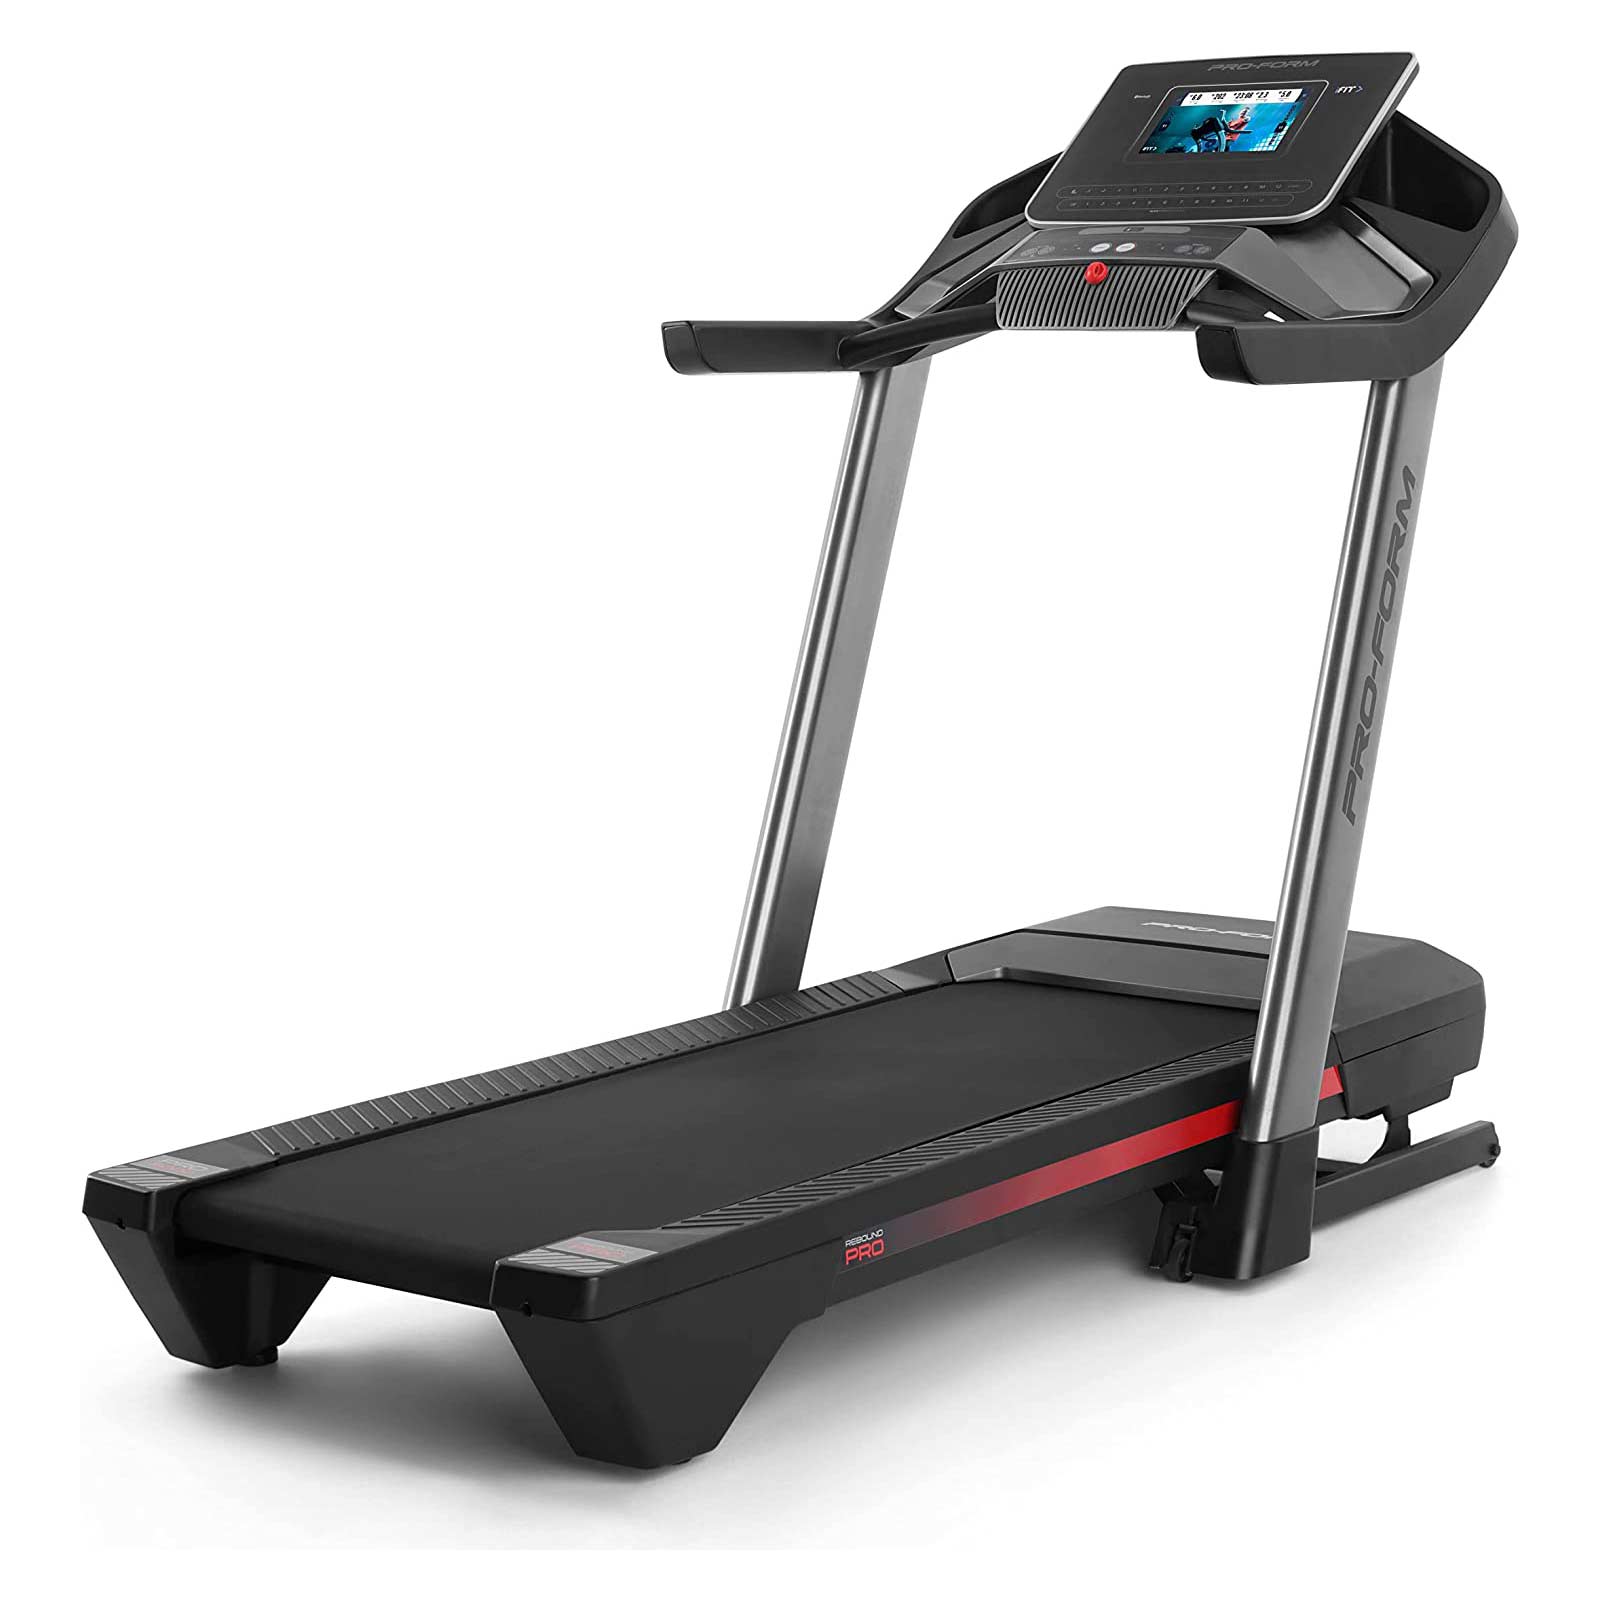 ProForm Pro 2000 Smart Treadmill Review